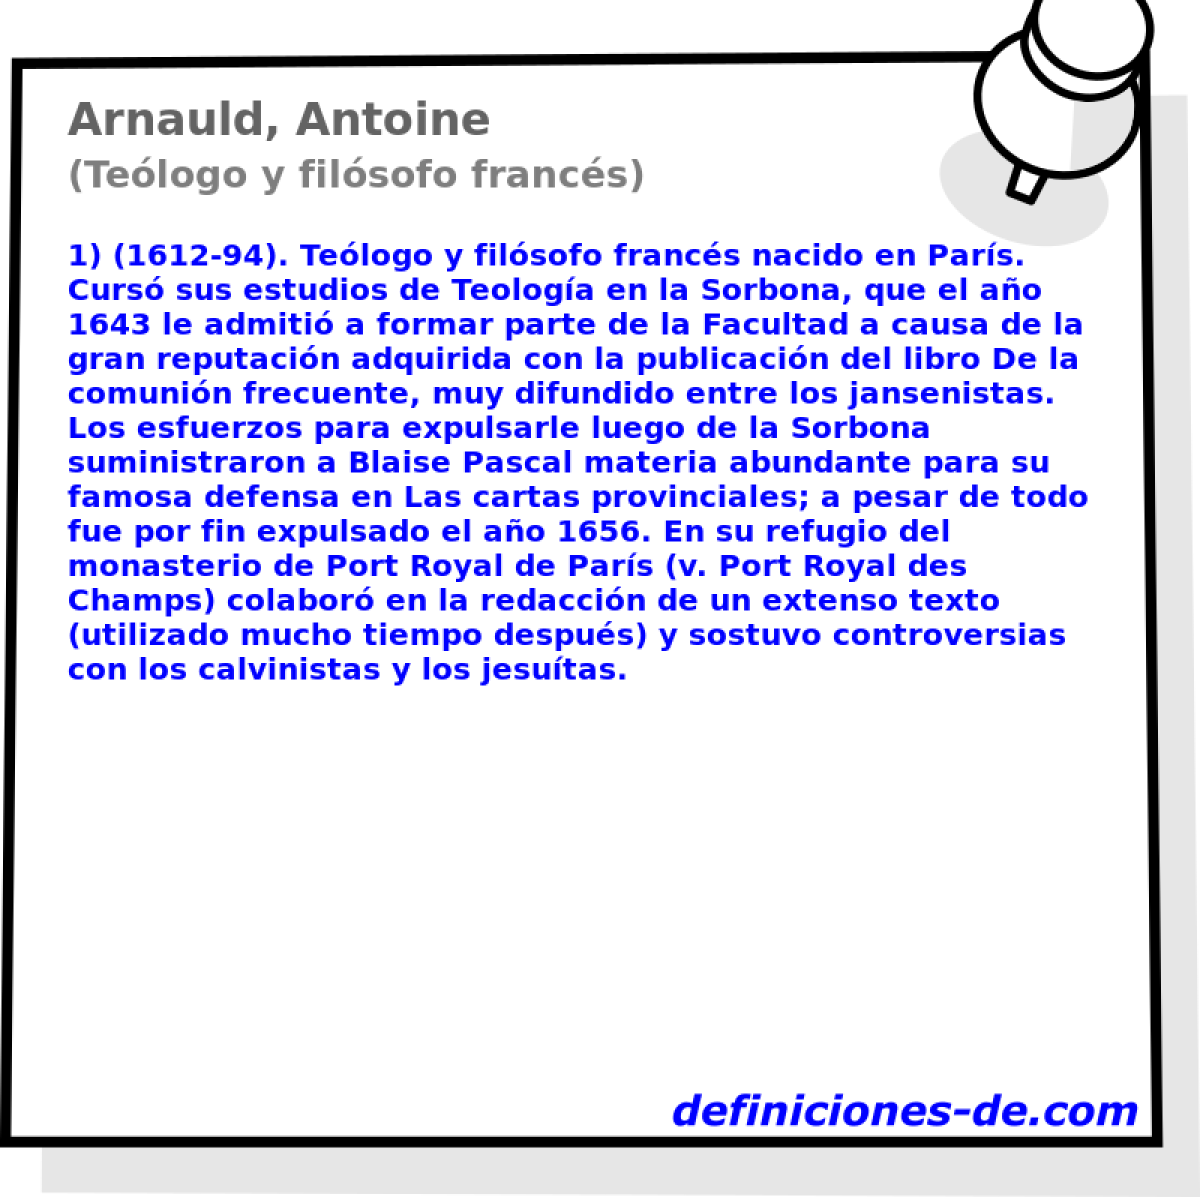 Arnauld, Antoine (Telogo y filsofo francs)